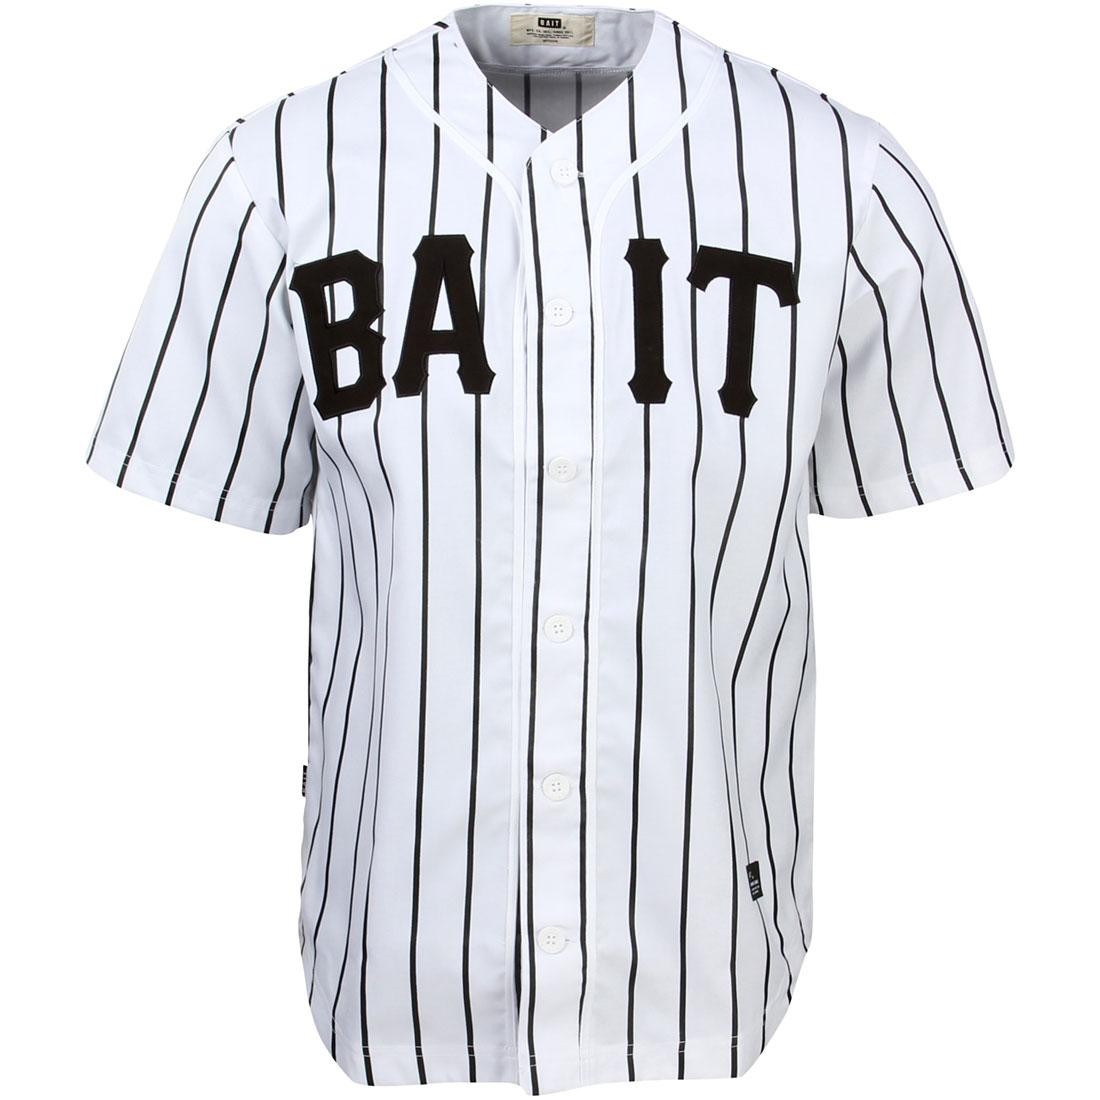 BAIT Men Sluggers Baseball Jersey - Pinstripe white black pinstripe